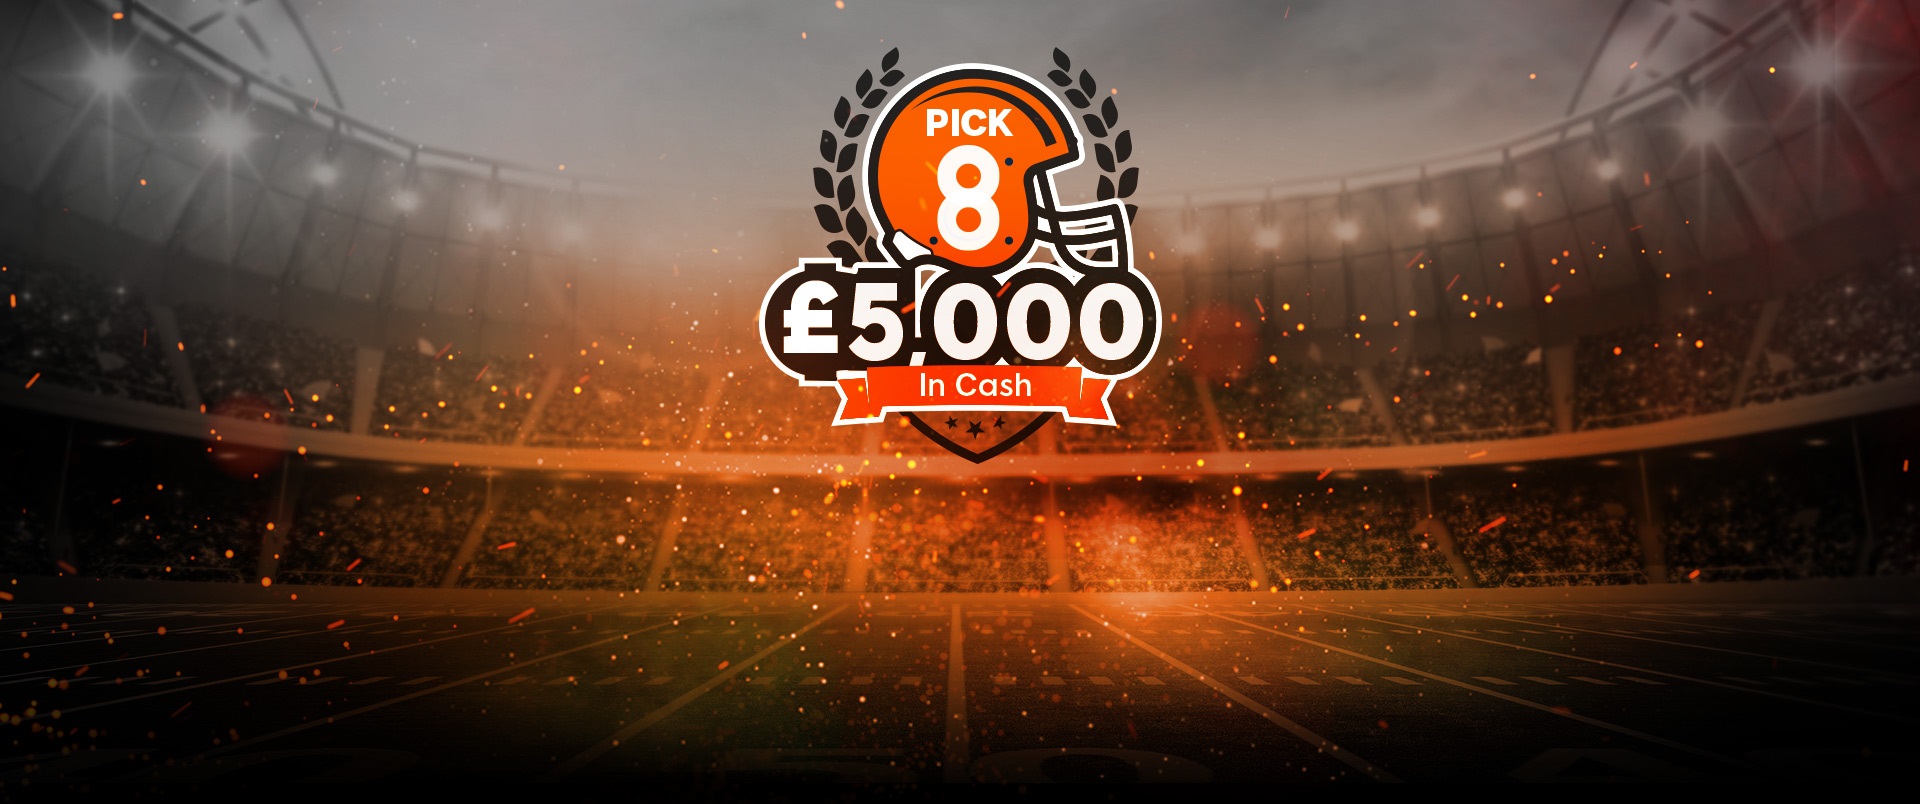 bookmaker 888sport pick 8 nfl contest offer